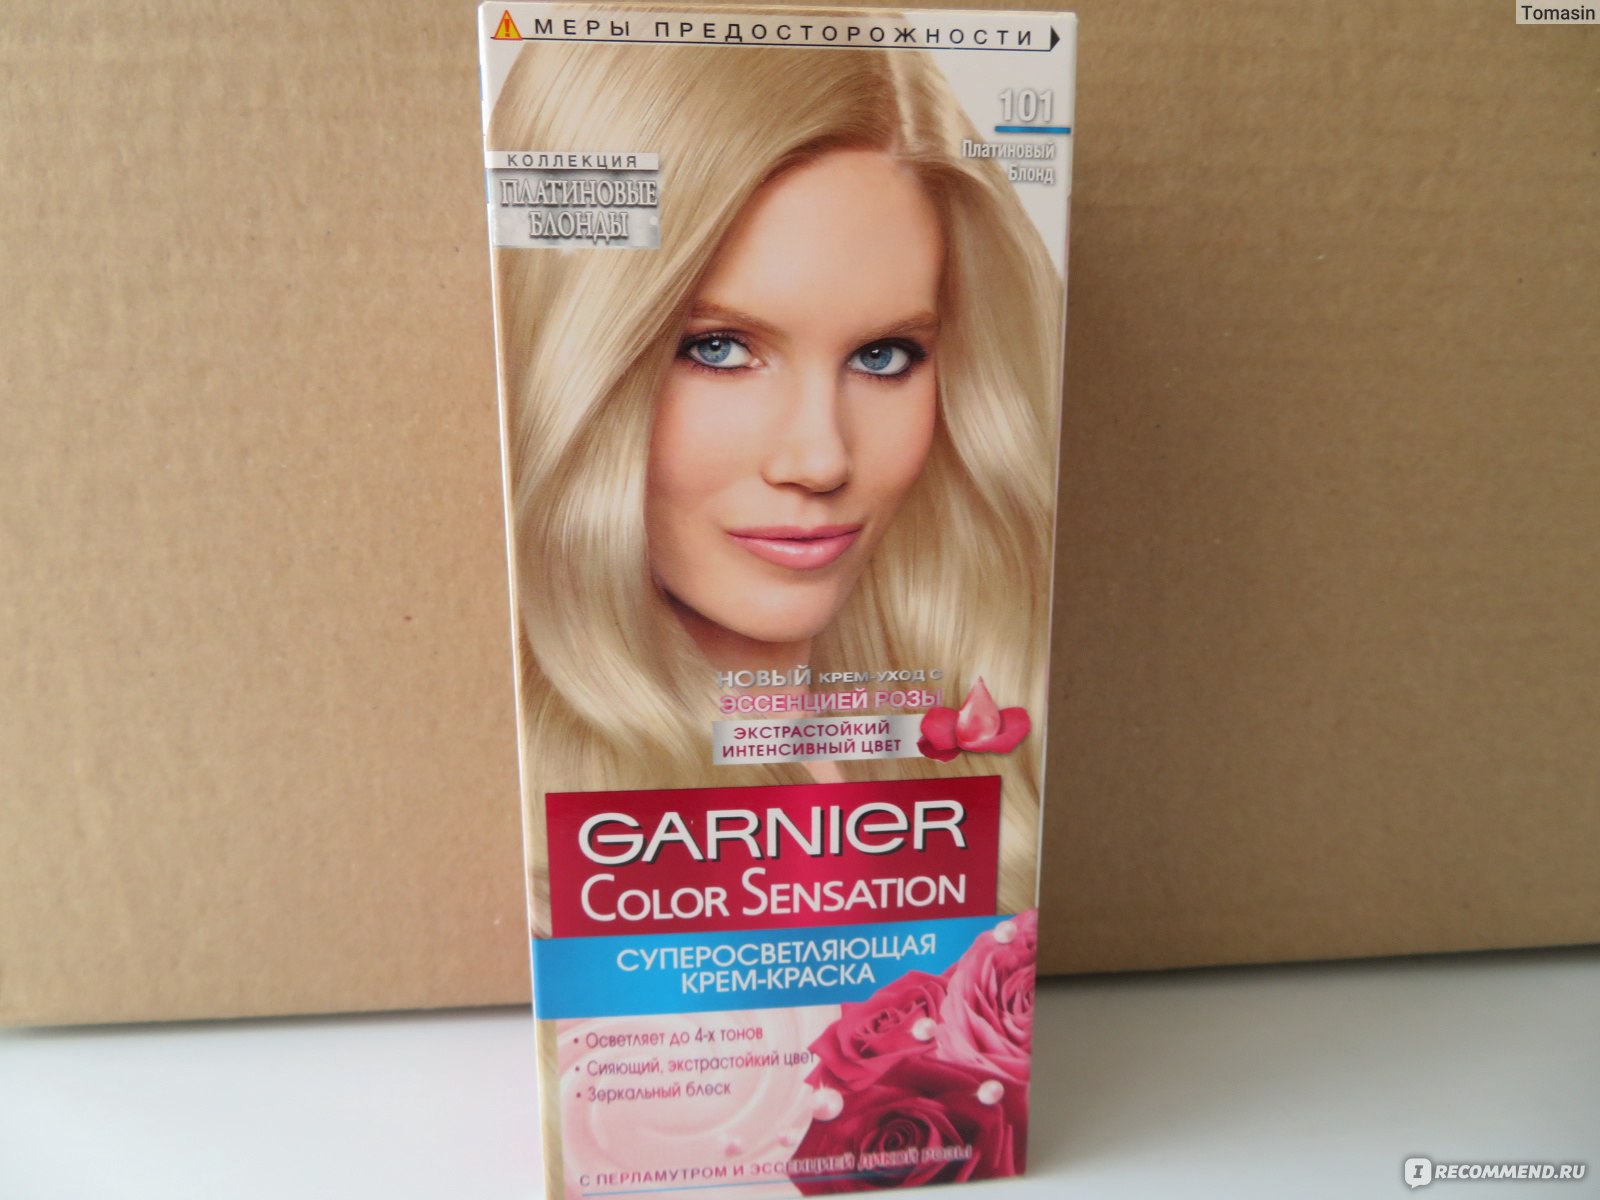 Garnier Color Sensation супер осветляющая